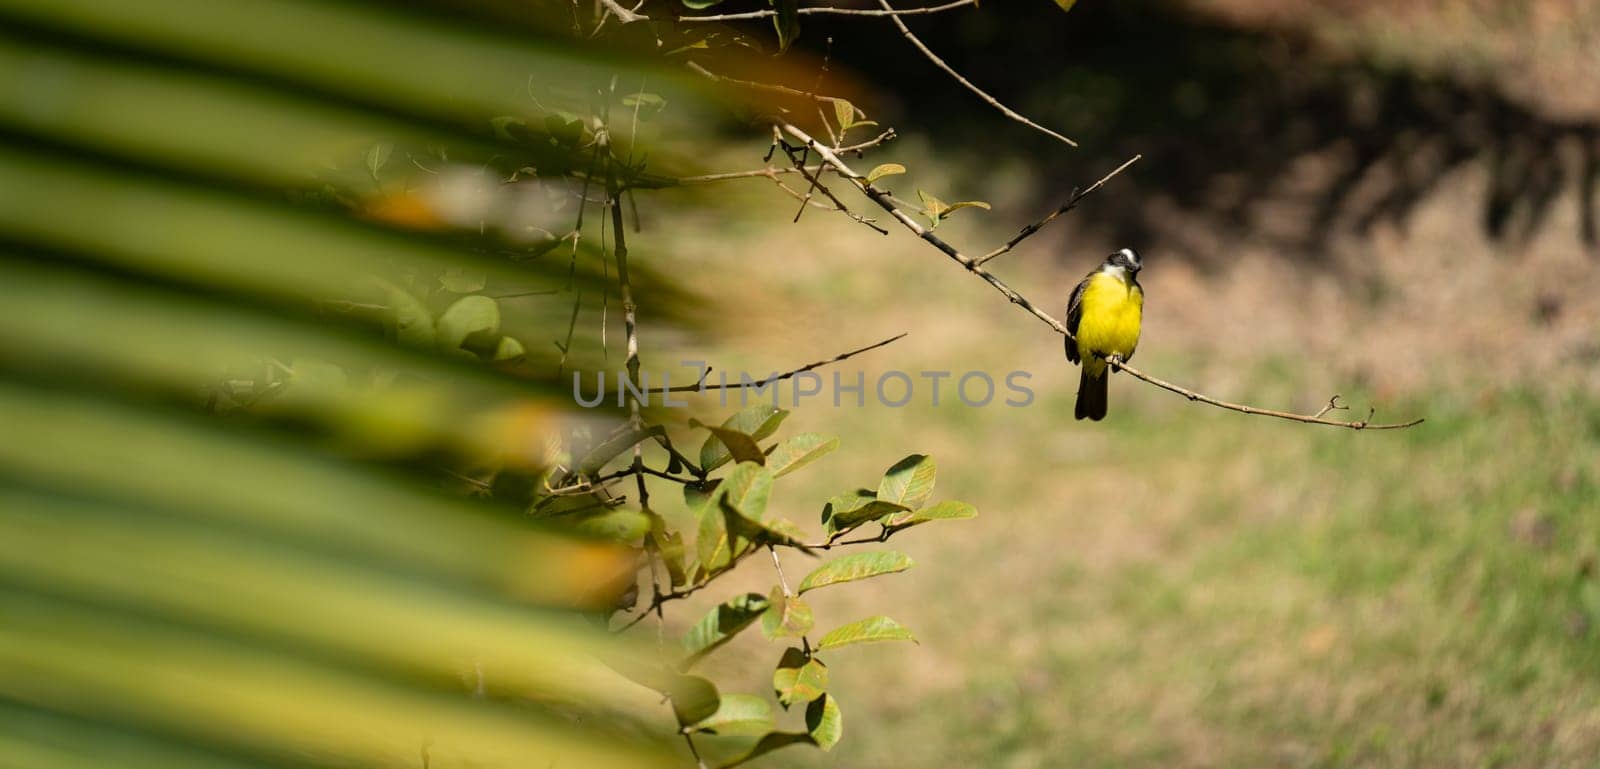 Great Kiskadee bird on twig with a blurred green backdrop.